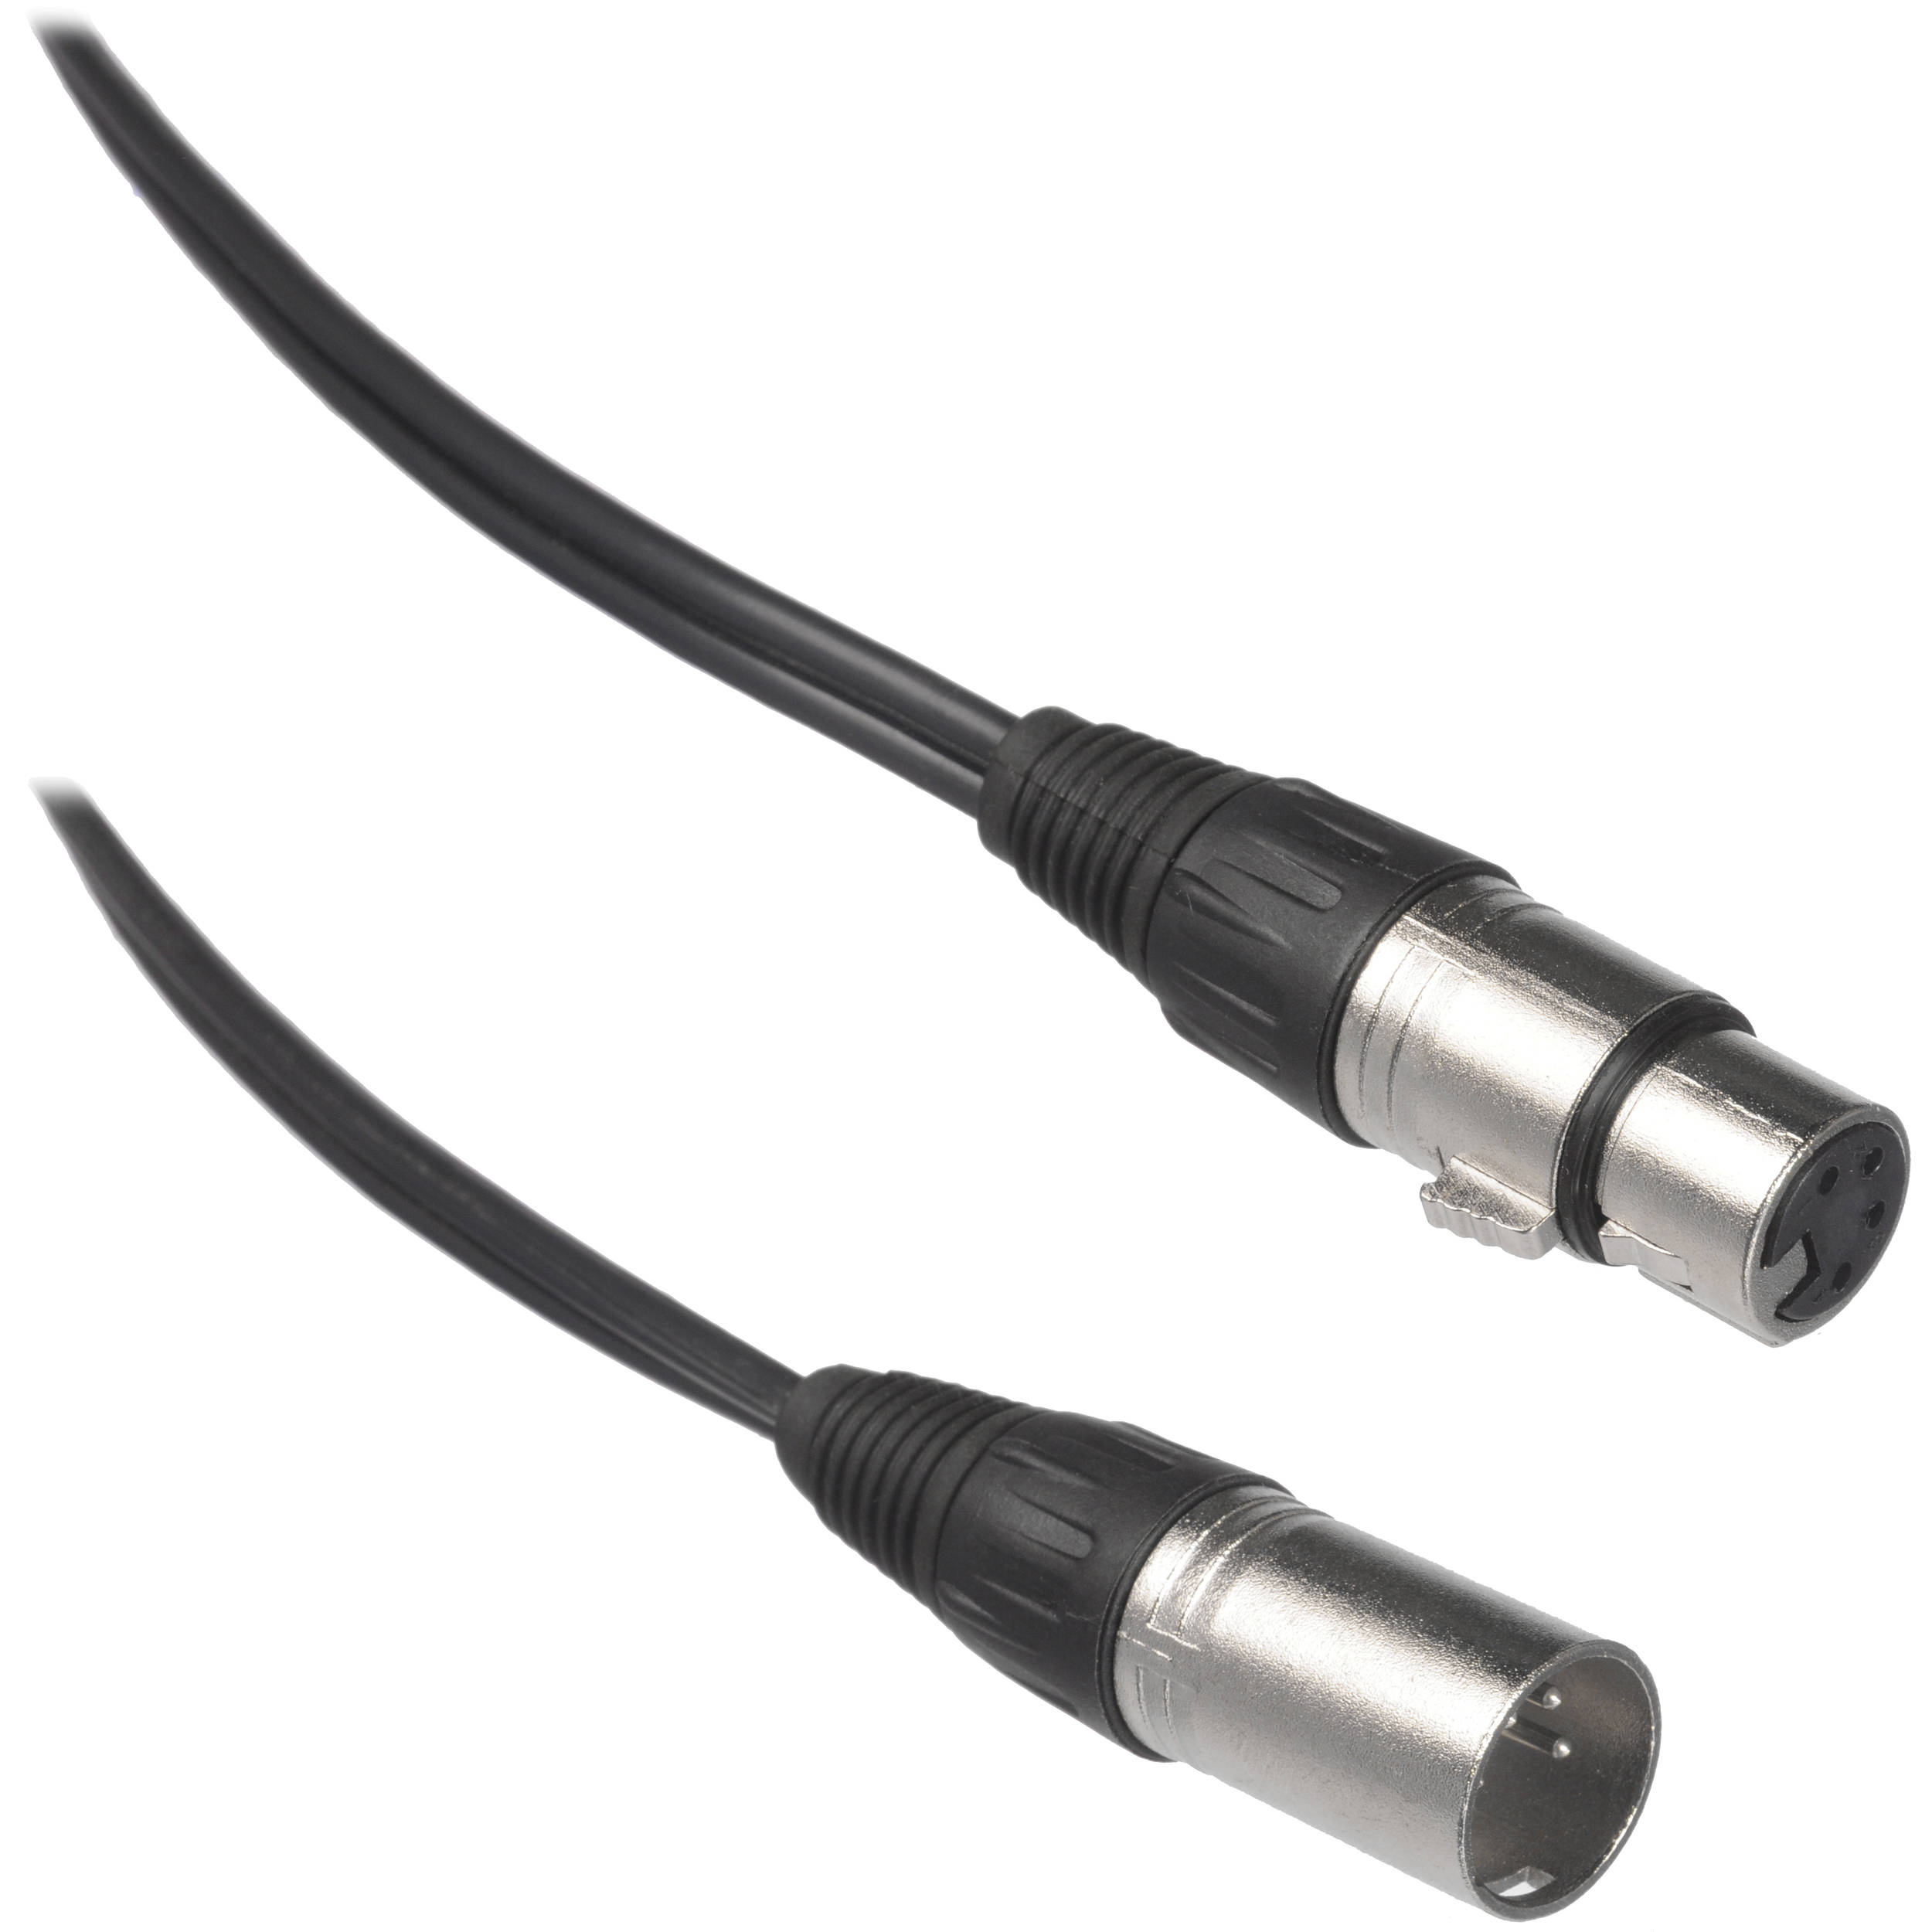 Bescor XLR-10MF 4-pin XLR Male to 4-pin Female Power Cable